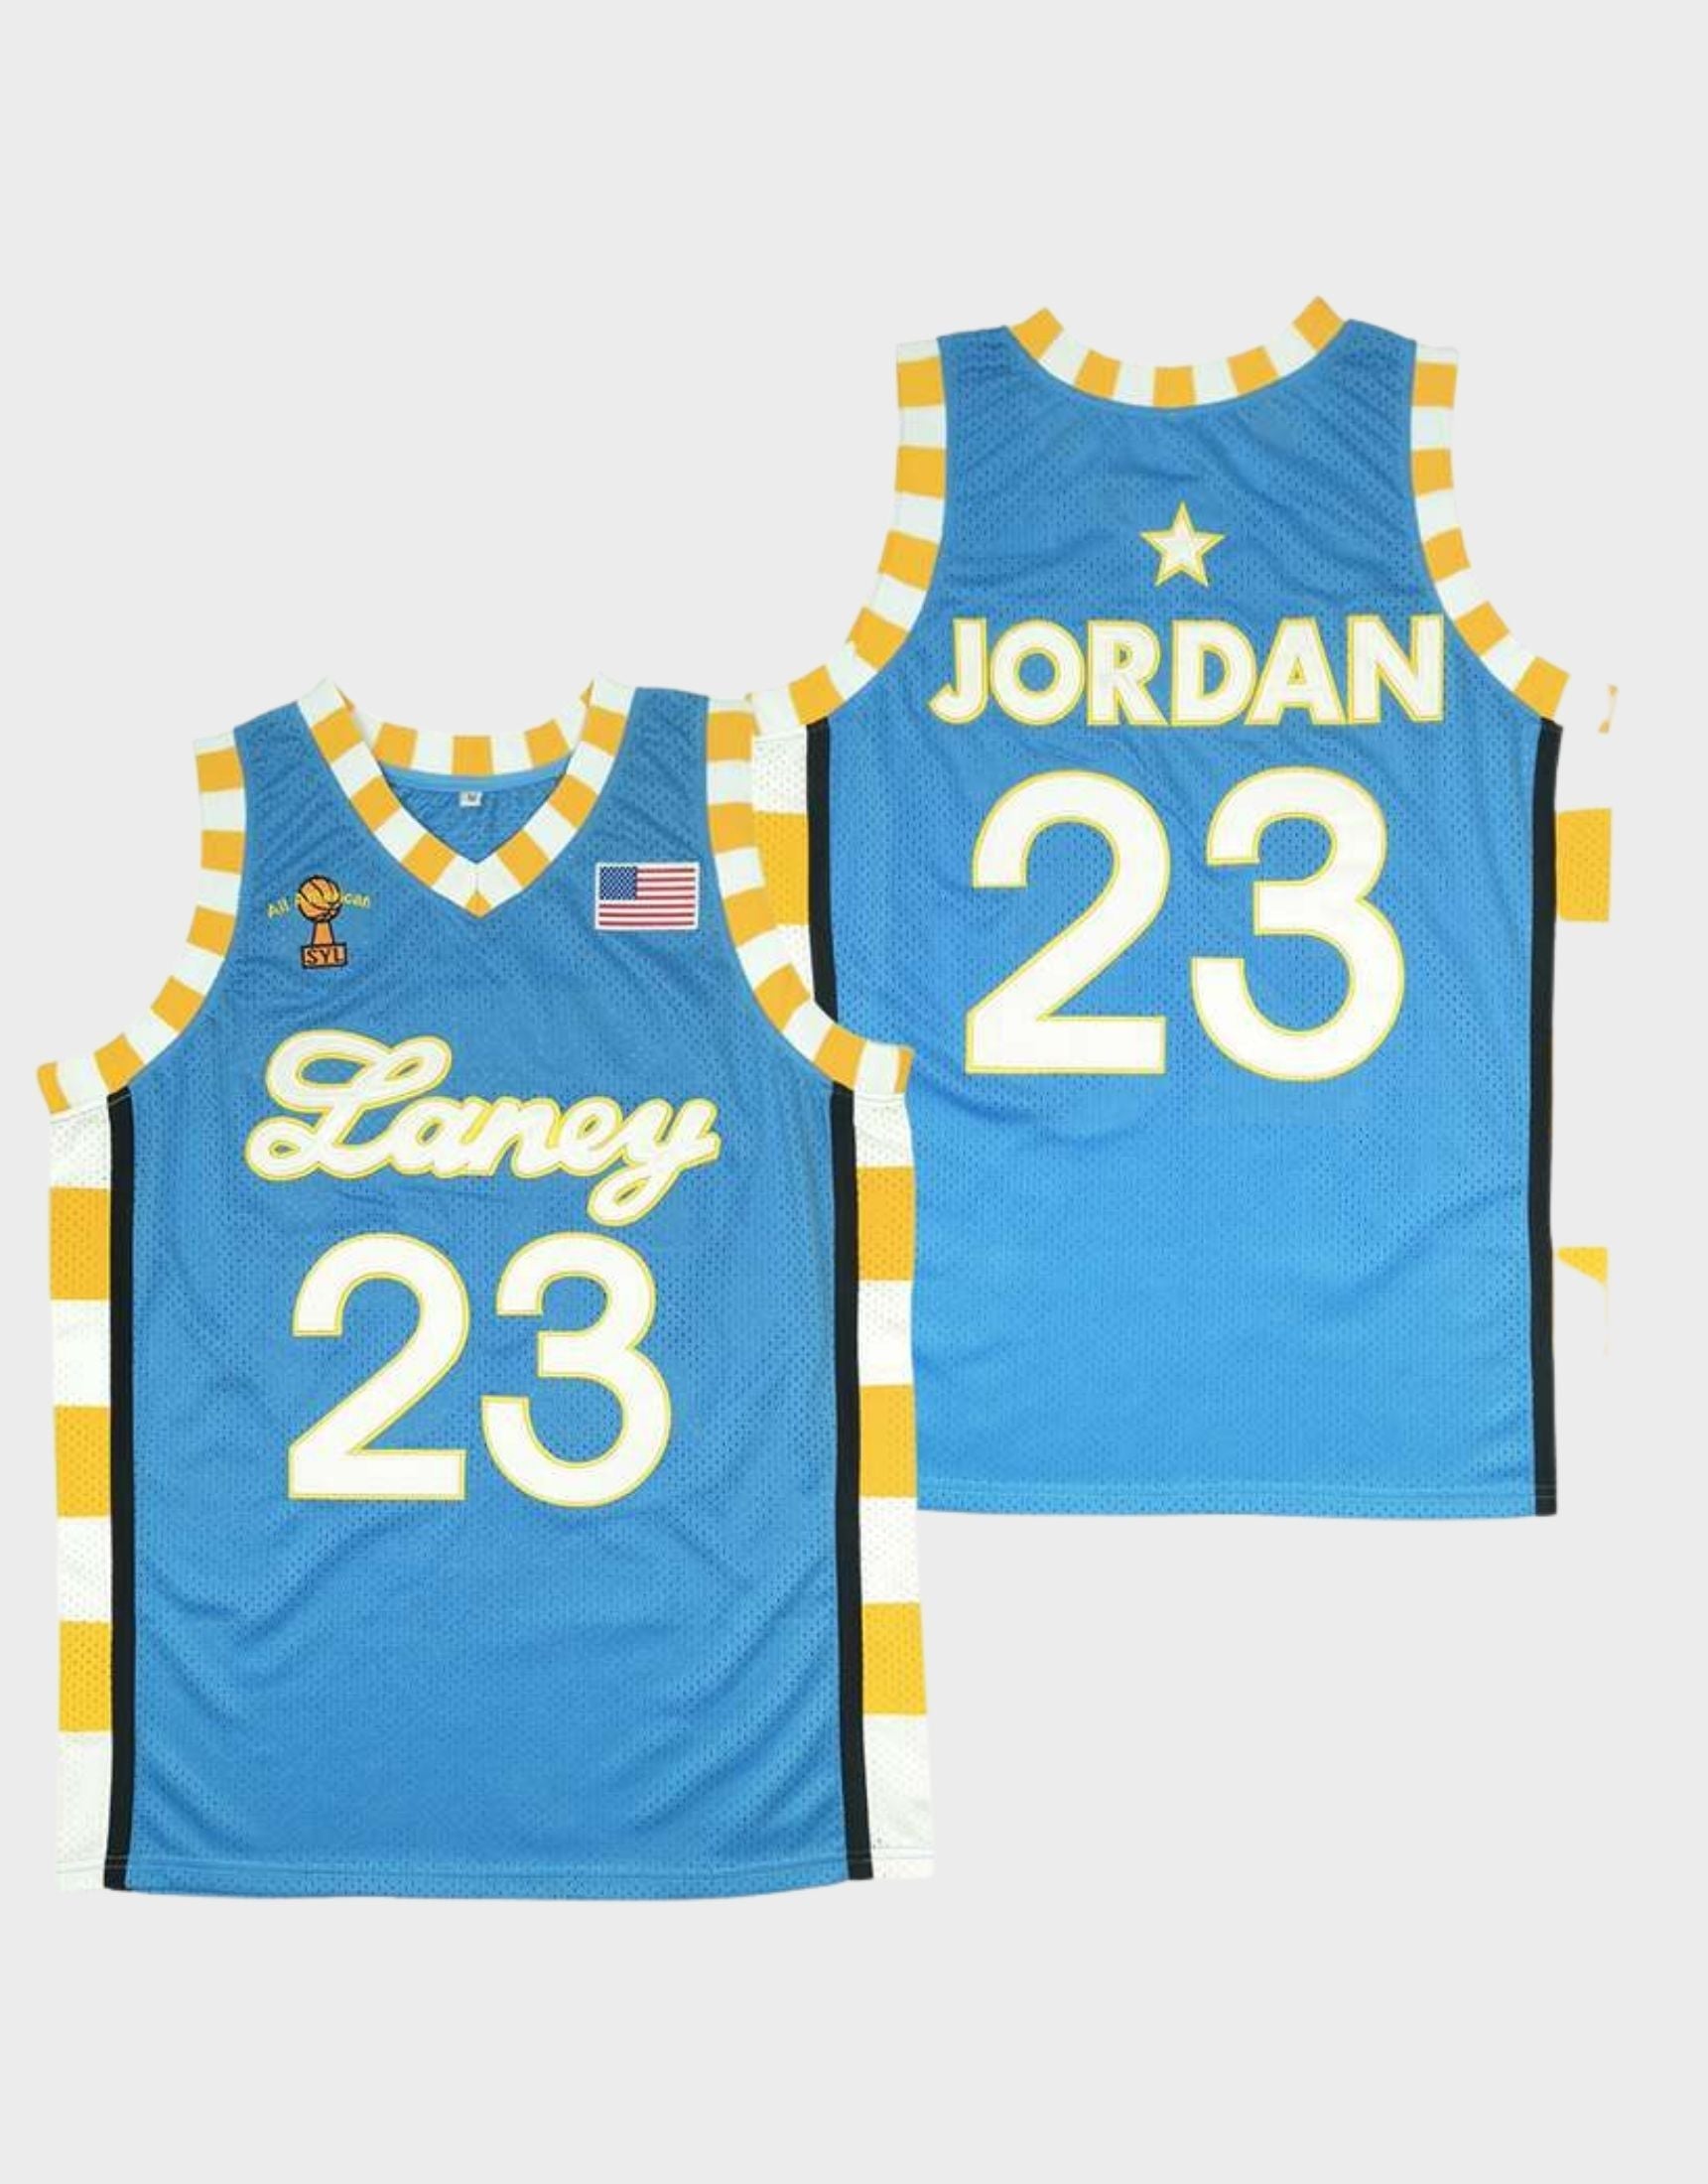 Basketball Jerseys Michael Jordan #23 Laney High School Jersey White